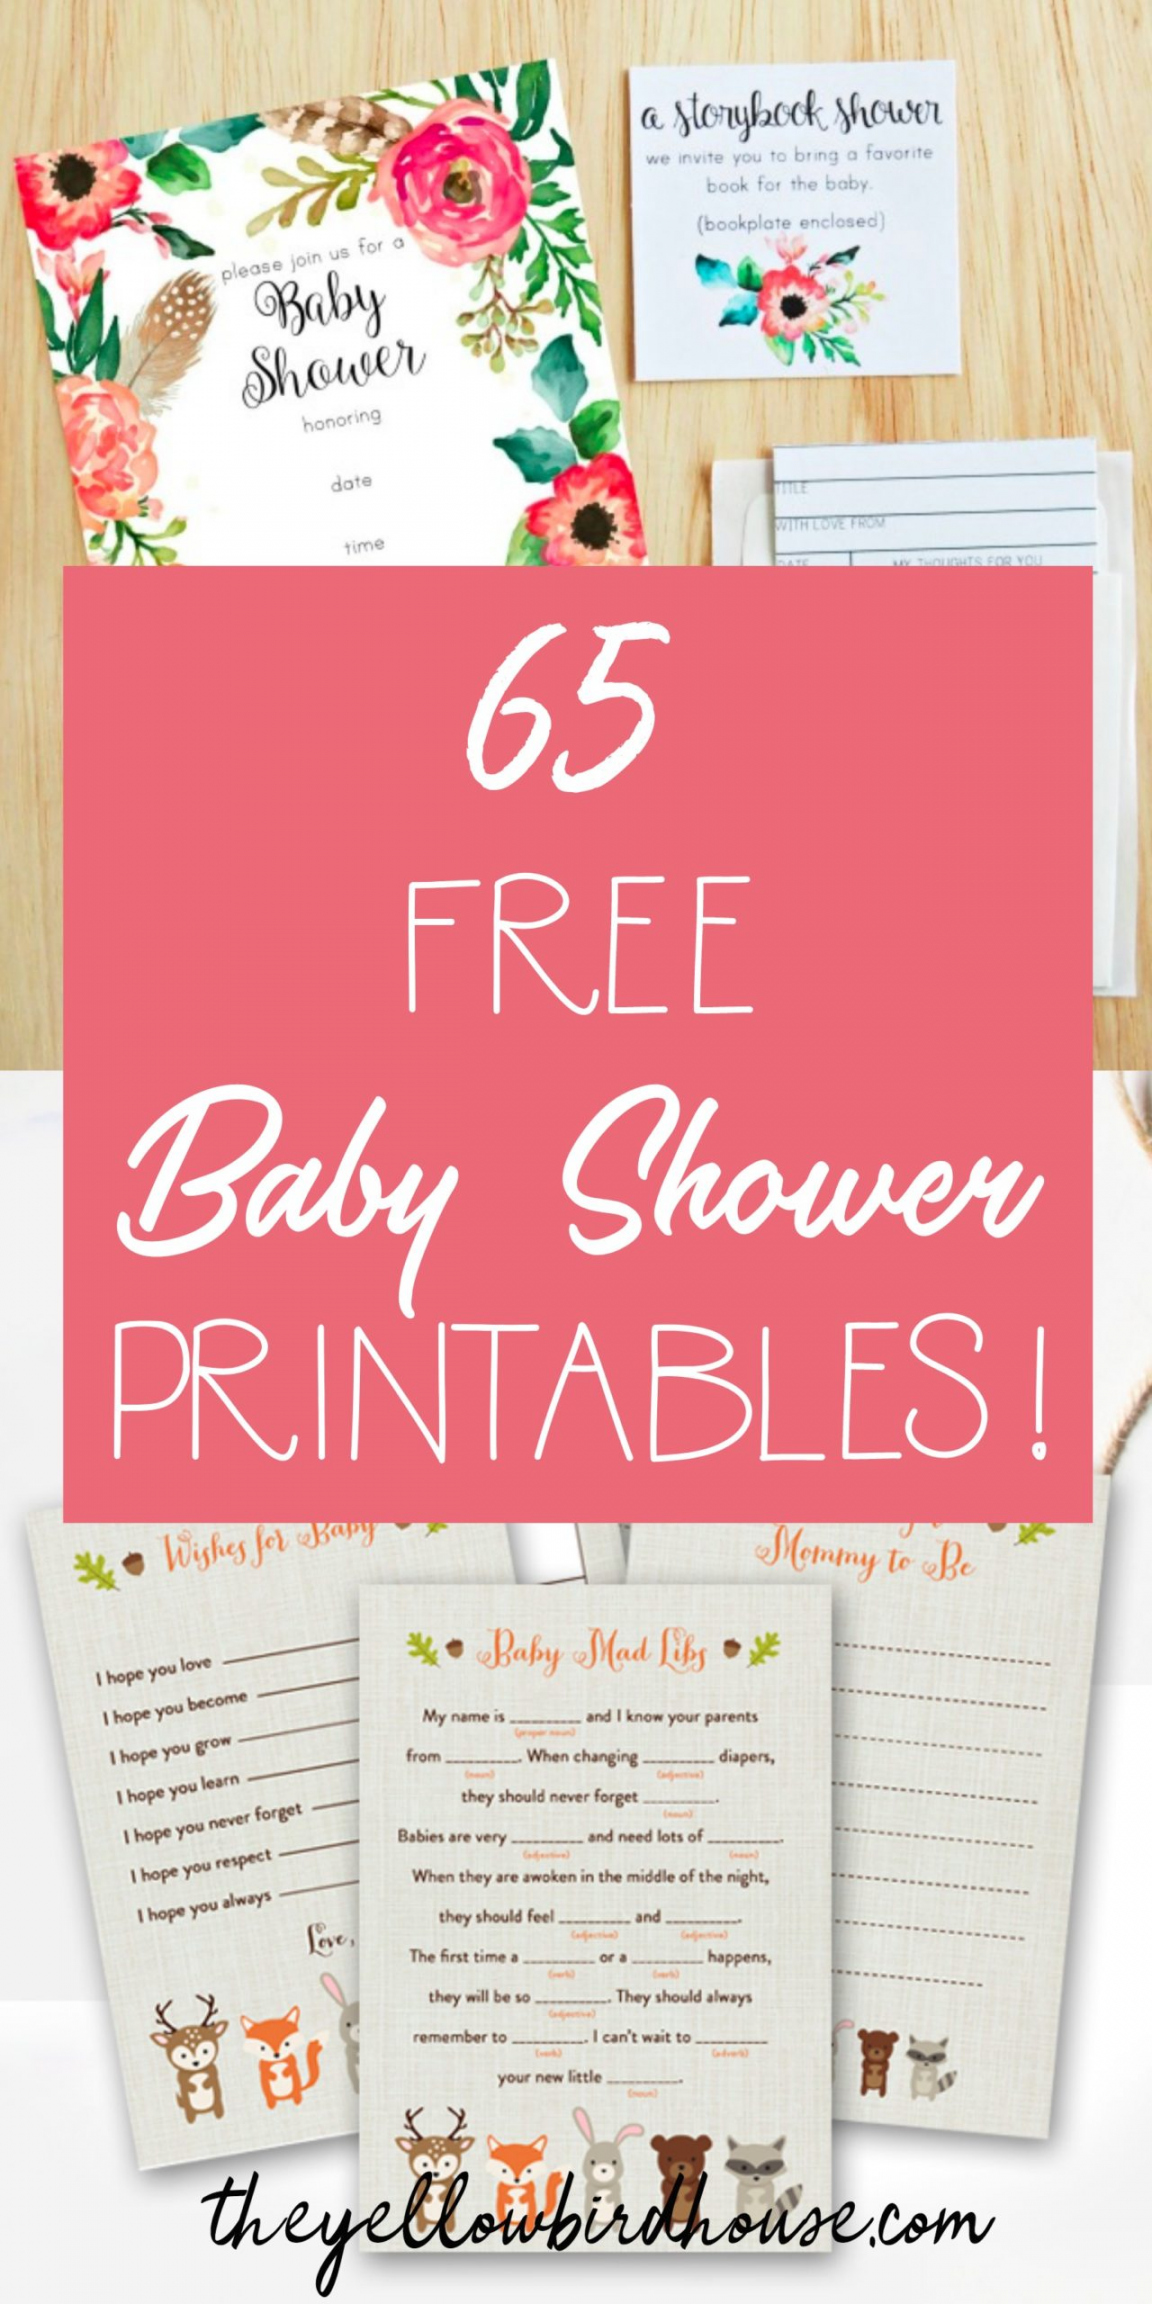 Free Baby Shower Printables - Printable -  Free Baby Shower Printables for an Adorable Party